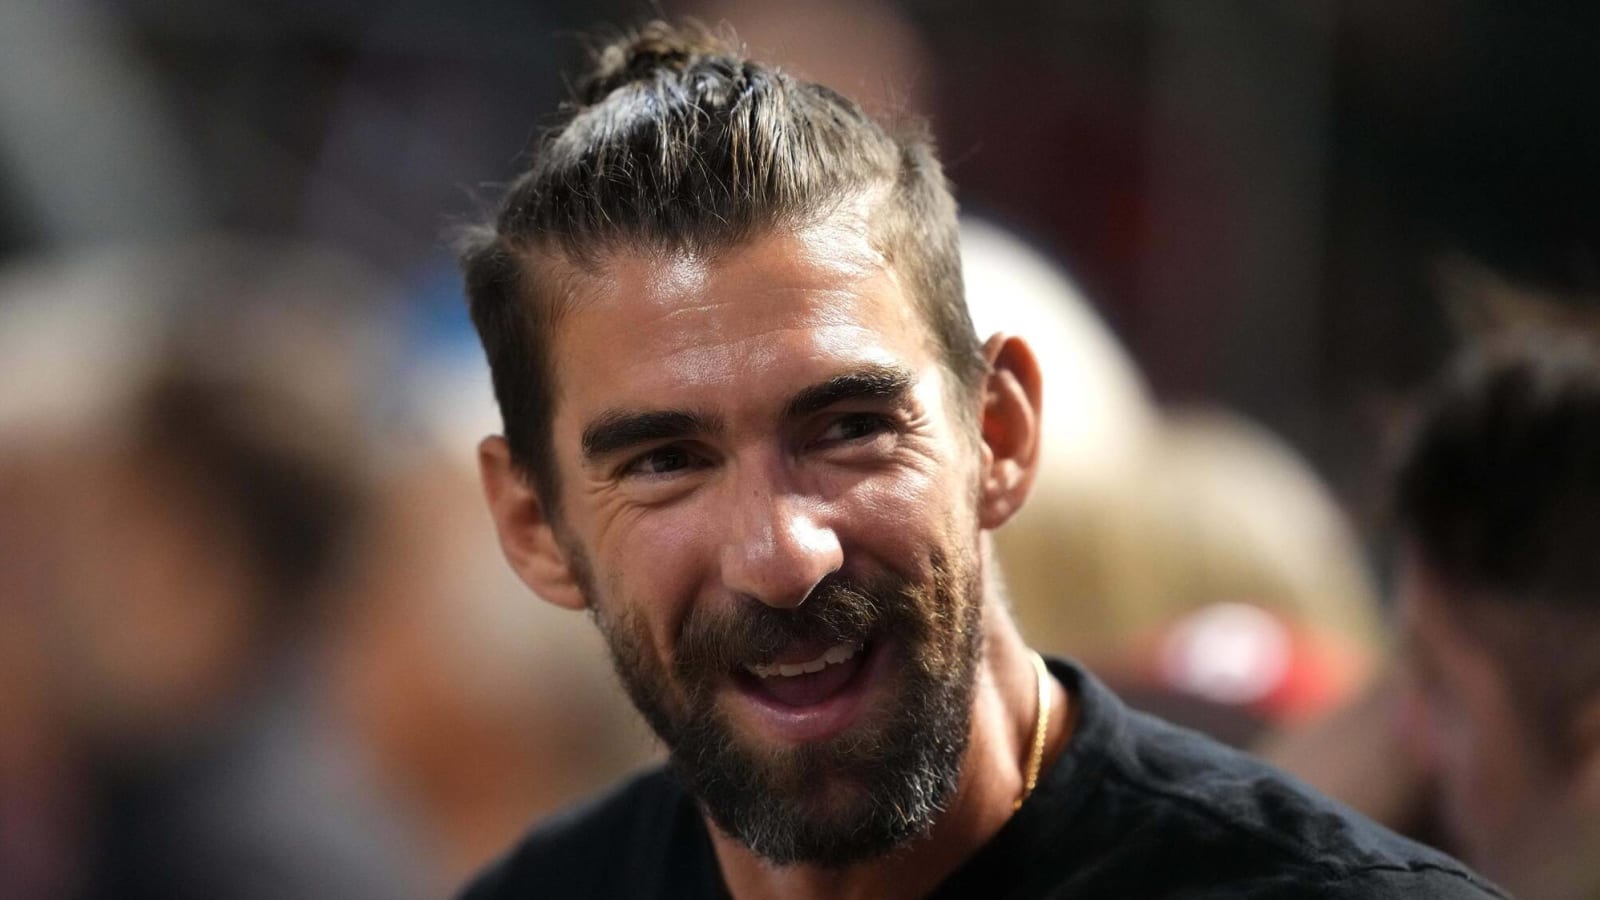 Michael Phelps spotlights athletes' mental health struggles